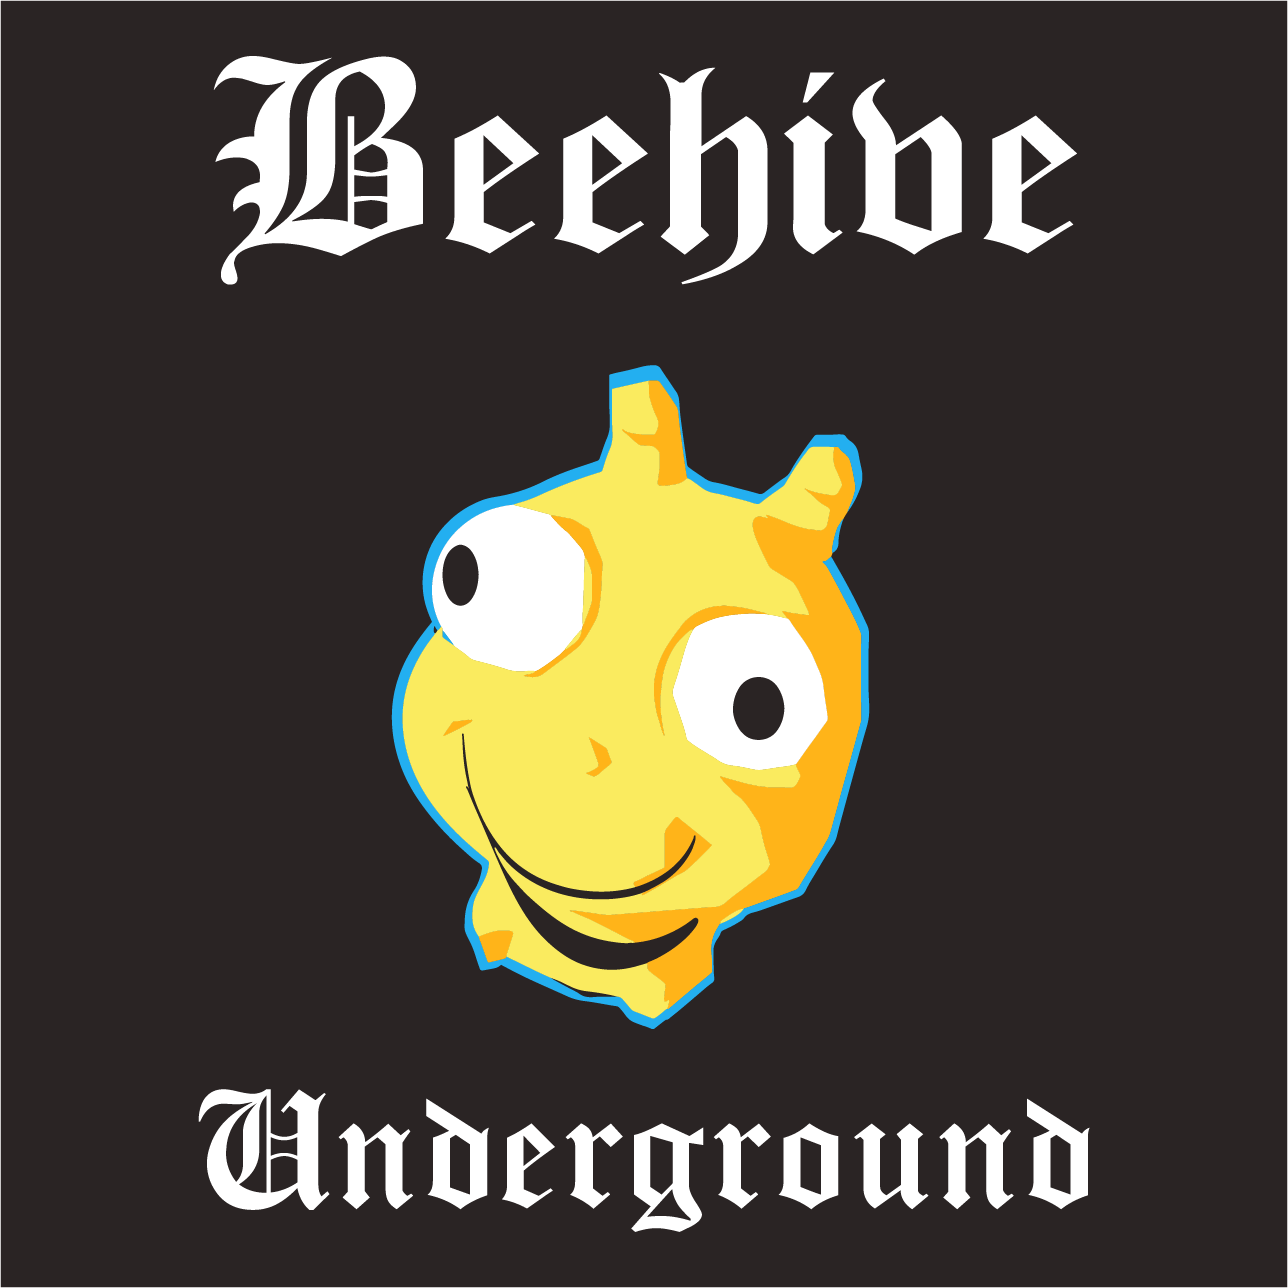 Beehive Underground St. Jude Christmas T-Shirt Drive shirt design - zoomed